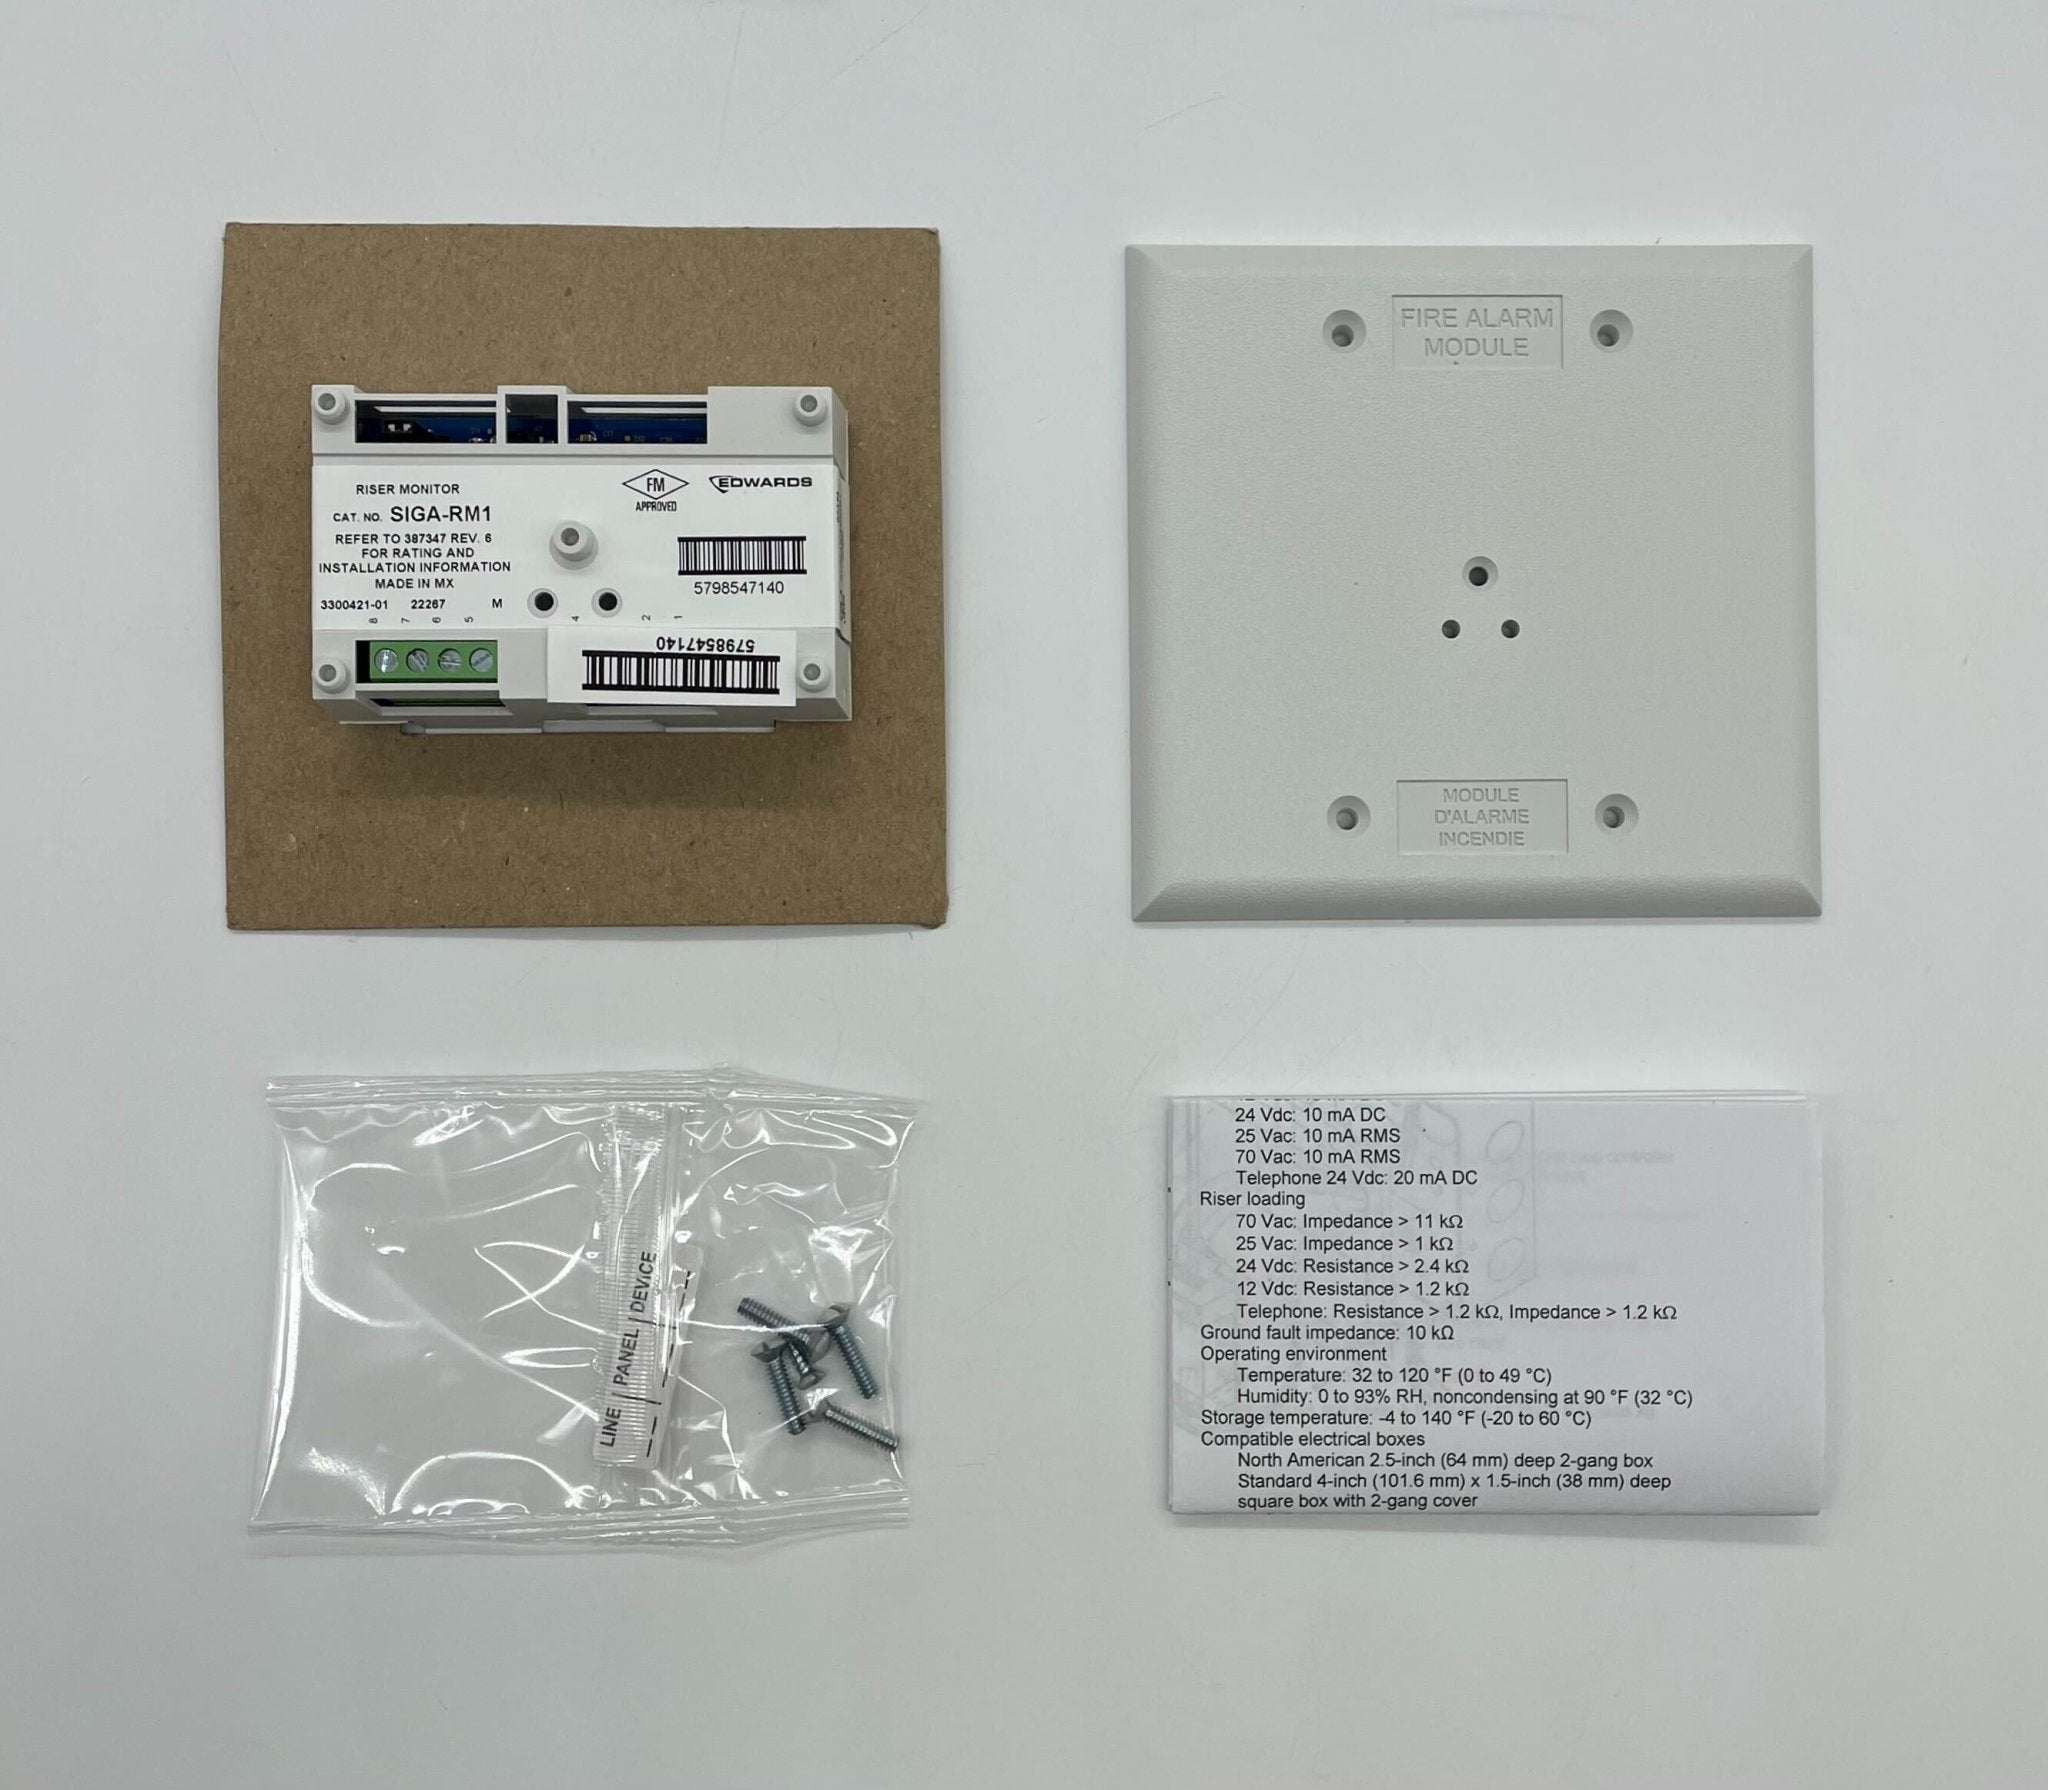 Edwards SIGA-RM1 - The Fire Alarm Supplier